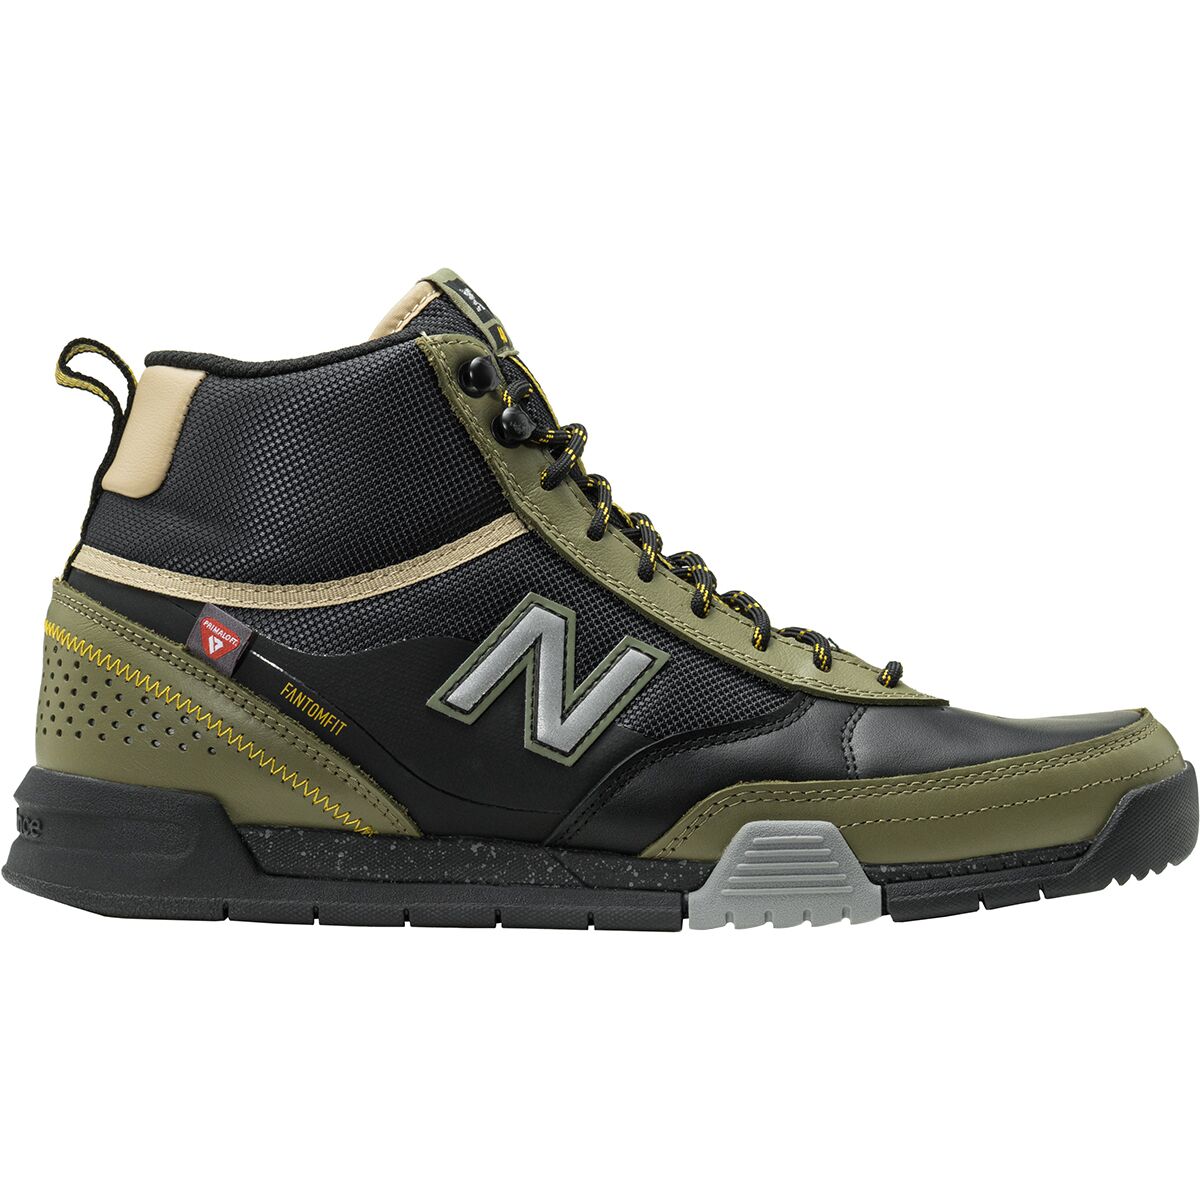 New Balance Numeric 440T Shoe - Men's